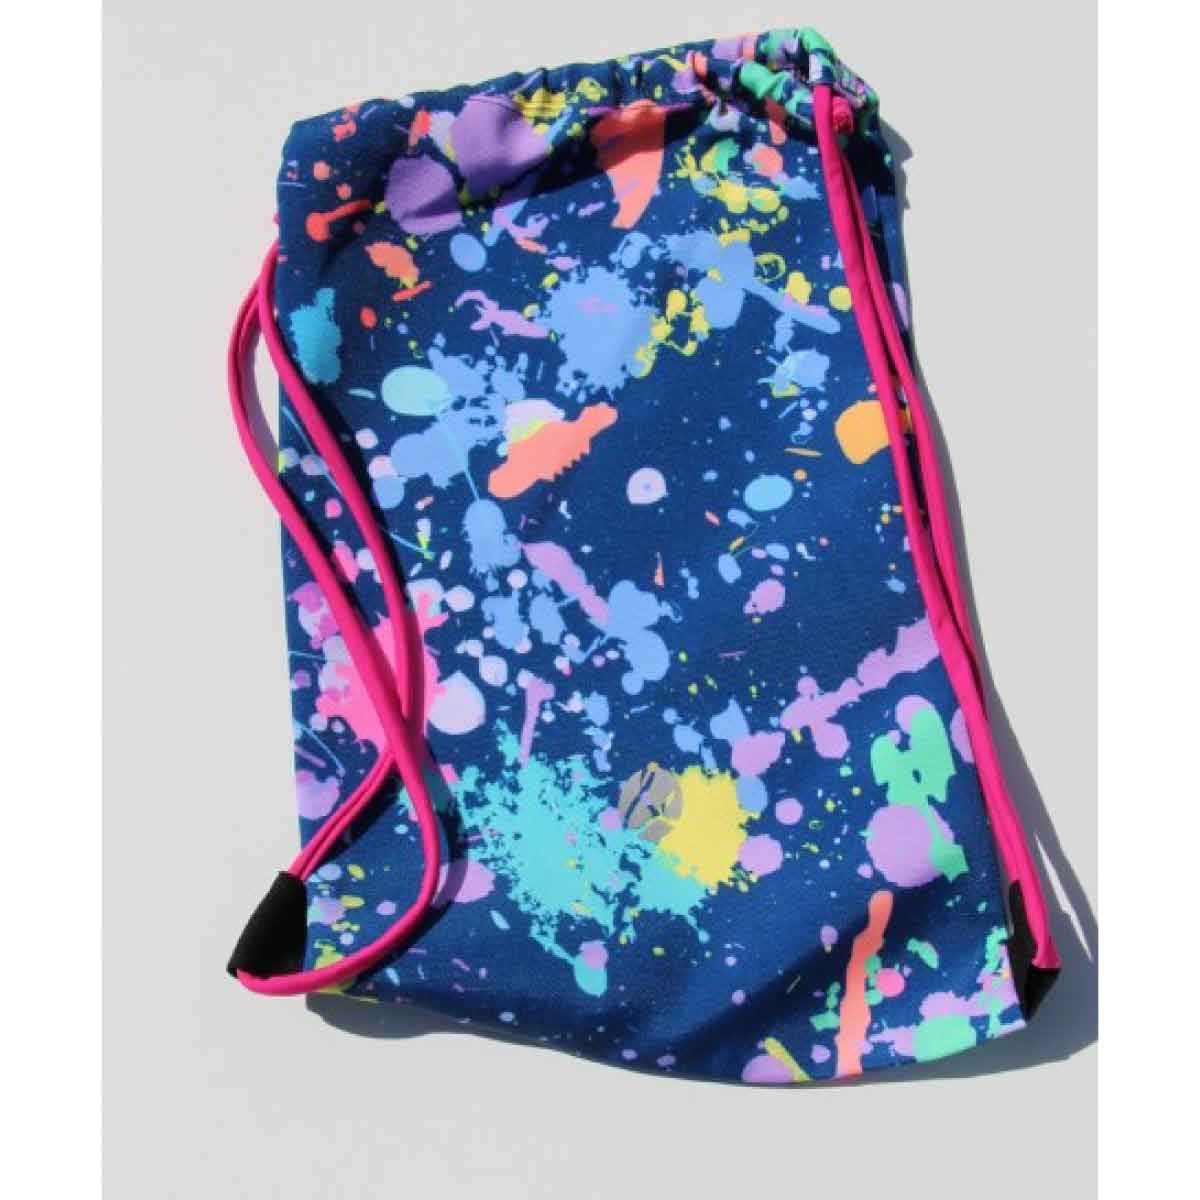 Splash paint - Drawstring backpack